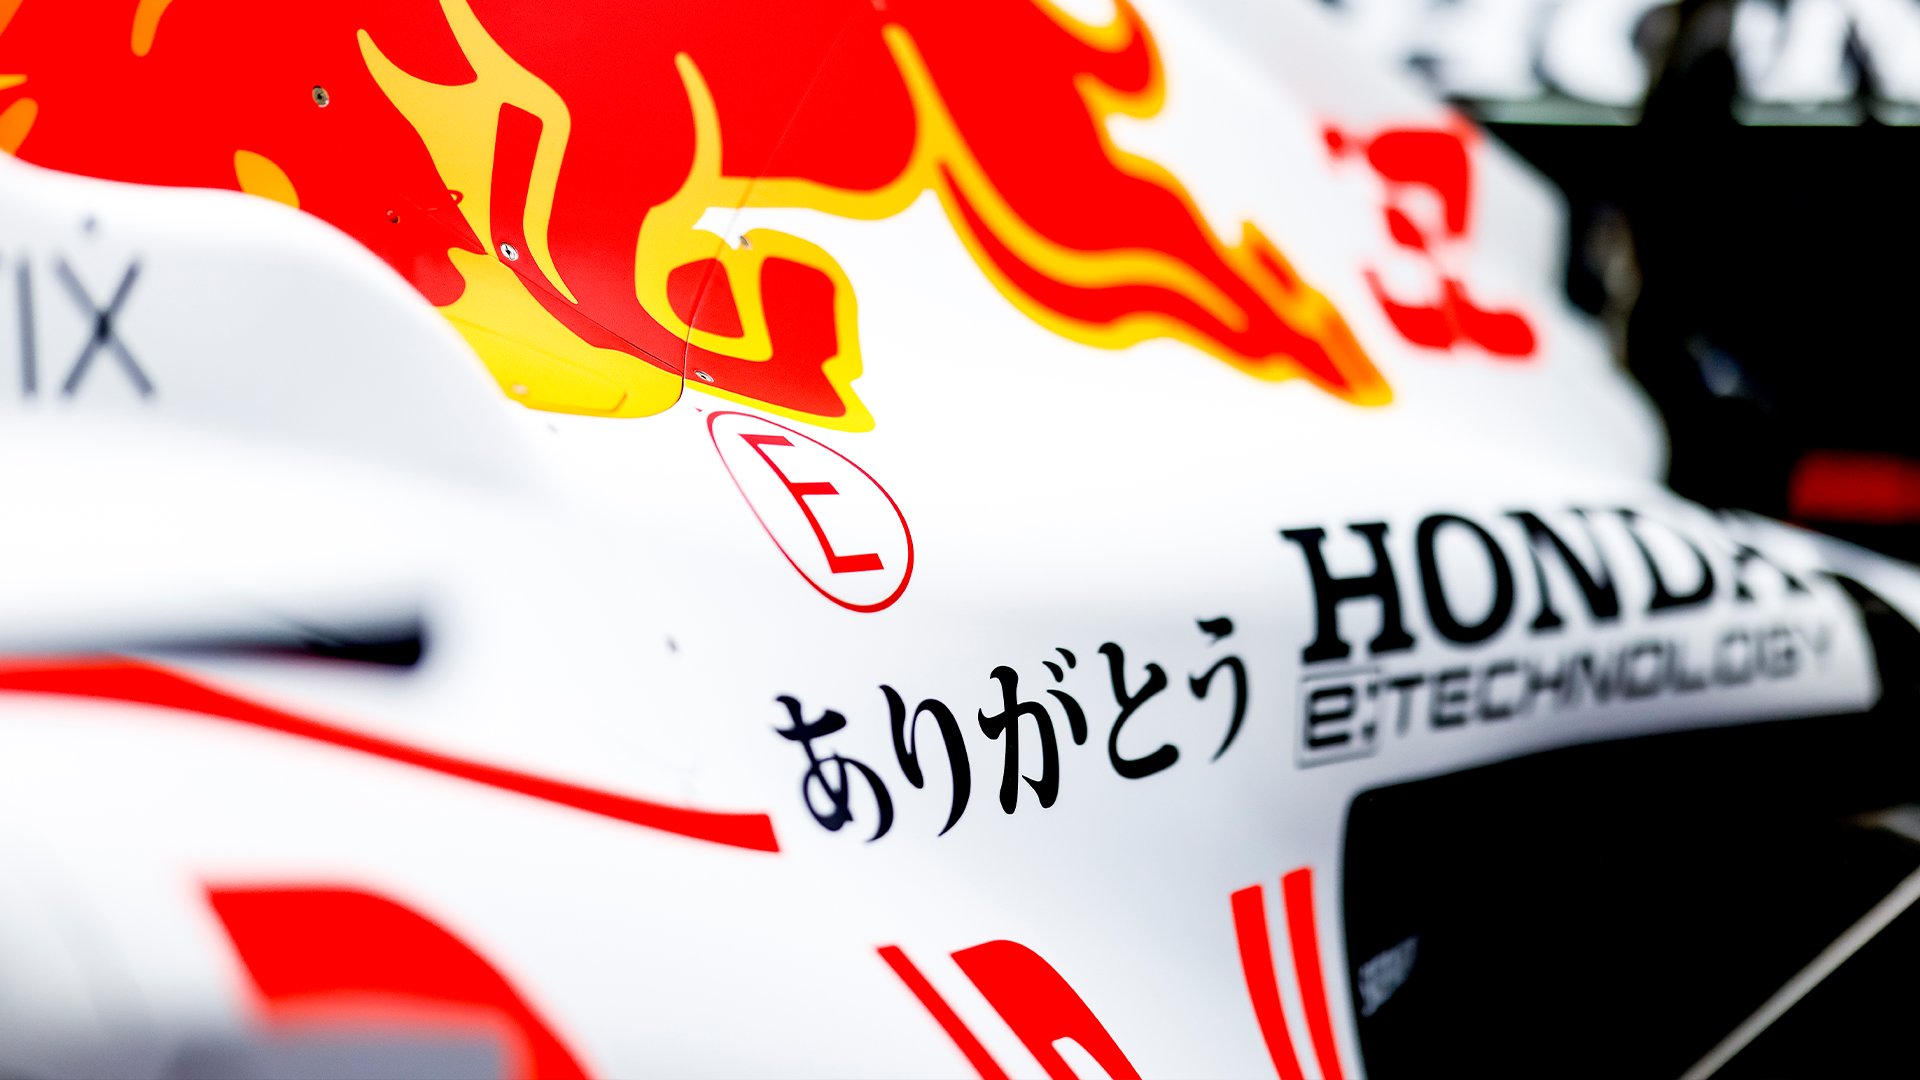 Photos) Red Bull Honda share new livery ahead of Turkish GP 2021